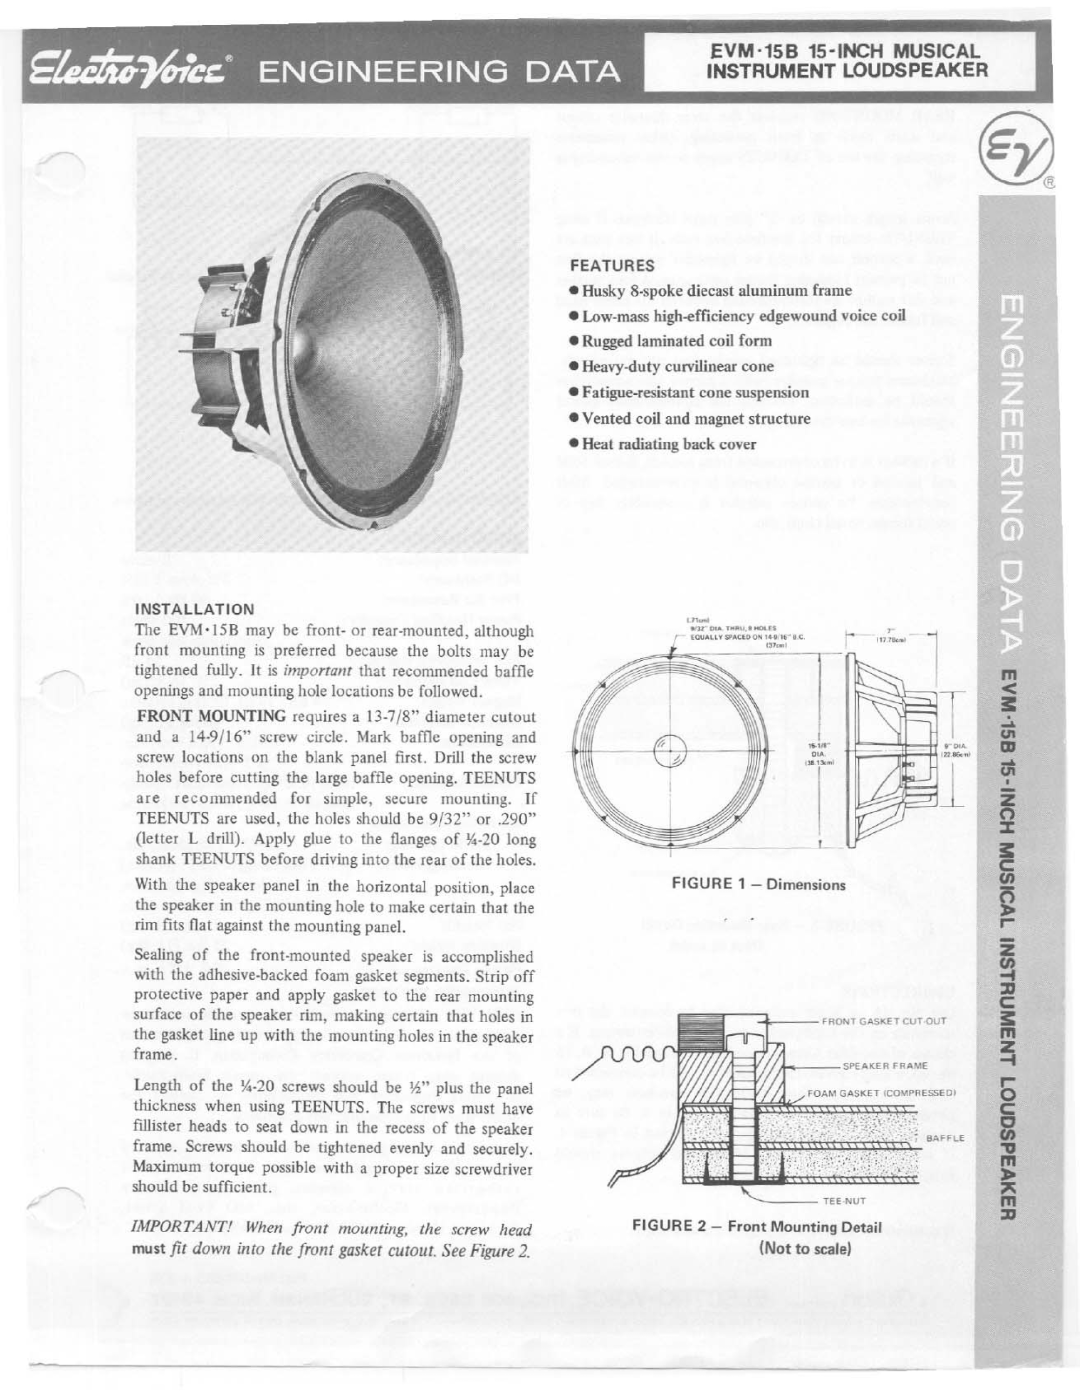 Electro-Voice EVM-15B manual 